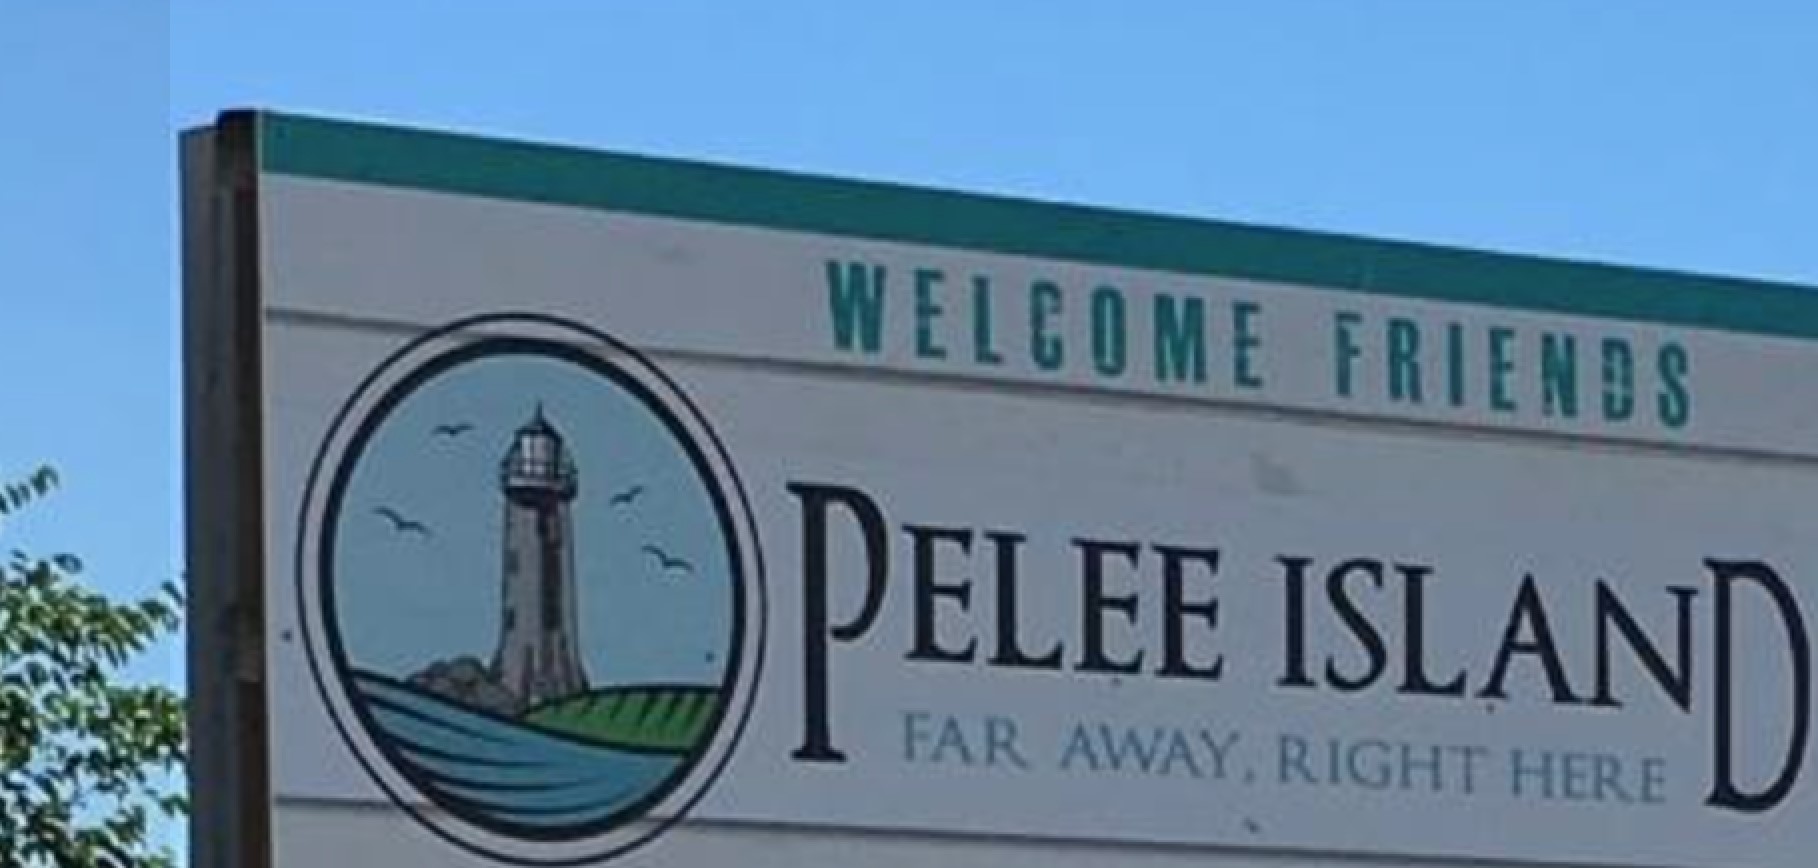 Pelee Island welcome sign (Pelee Island)